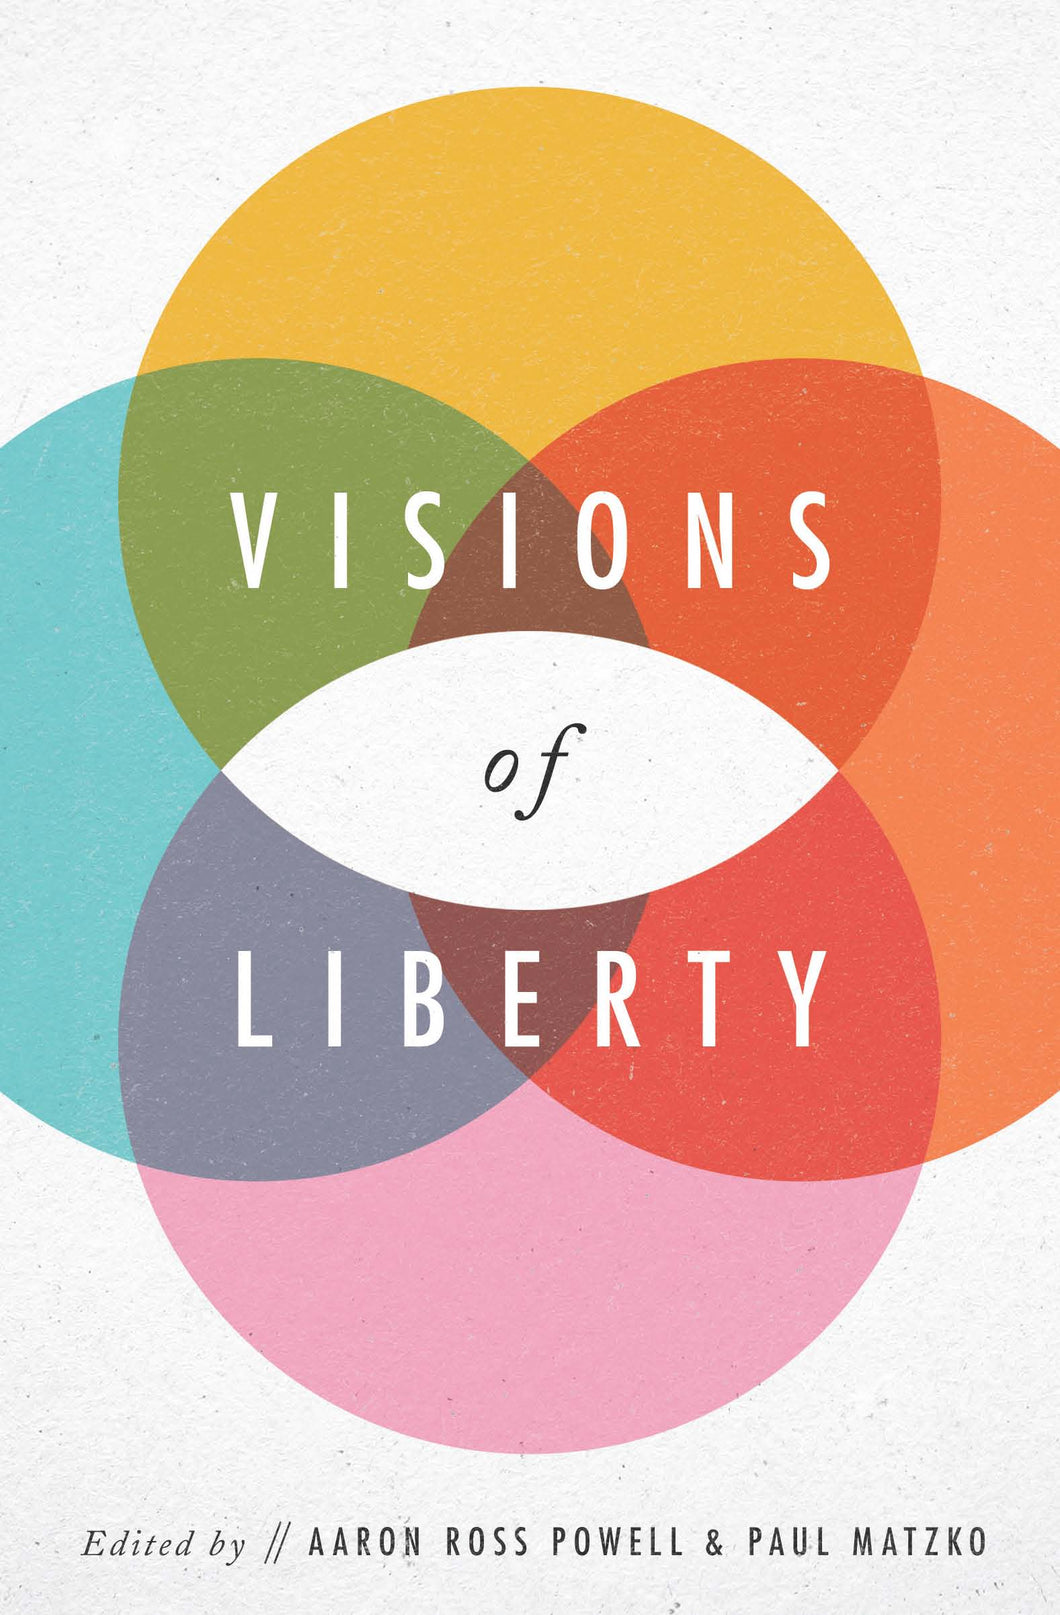 Visions of Liberty